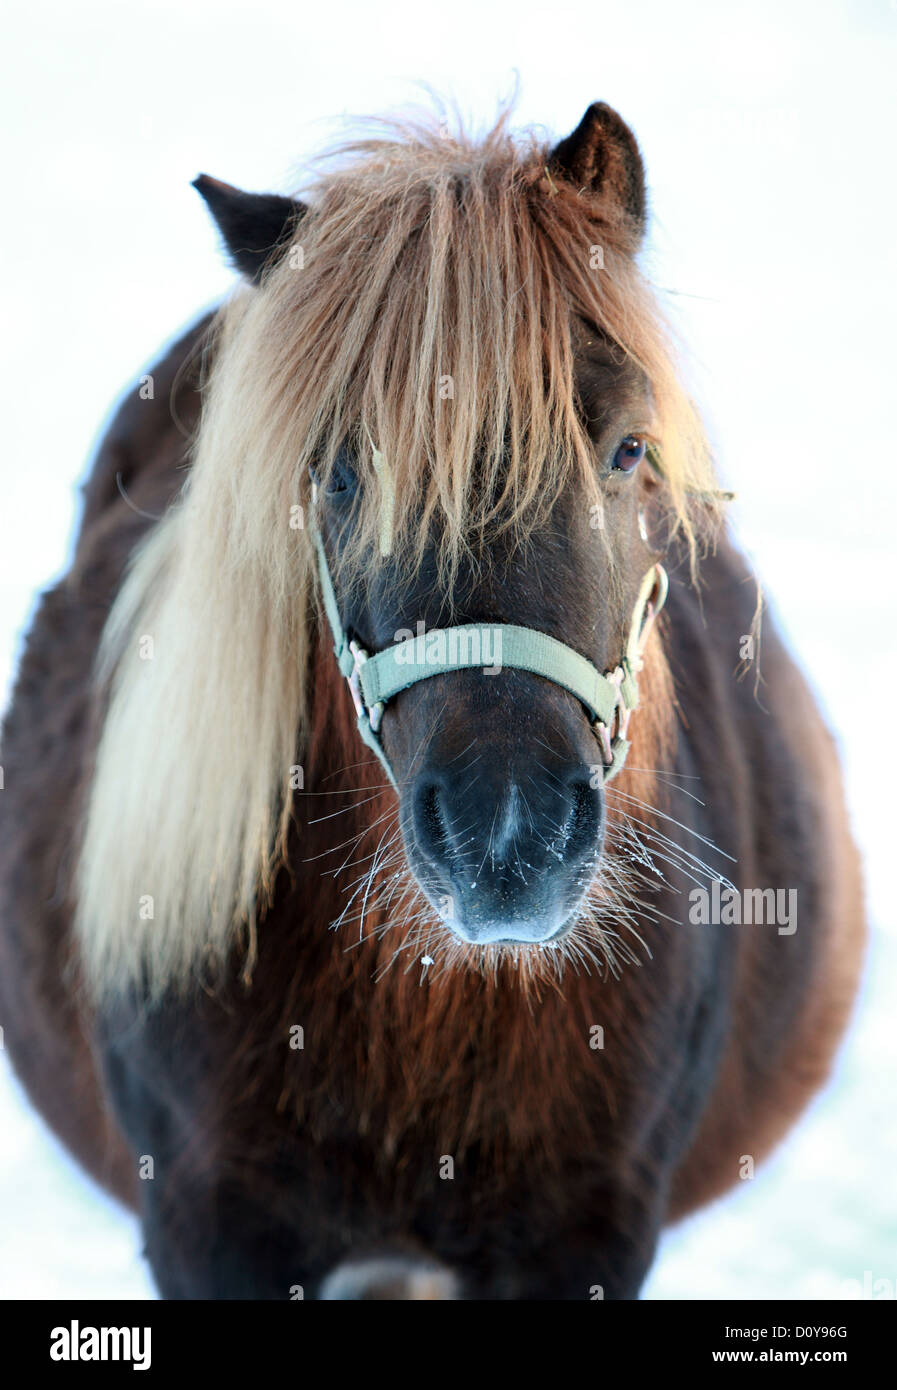 Väring, Sweden, promising Shetland pony in portrait Stock Photo